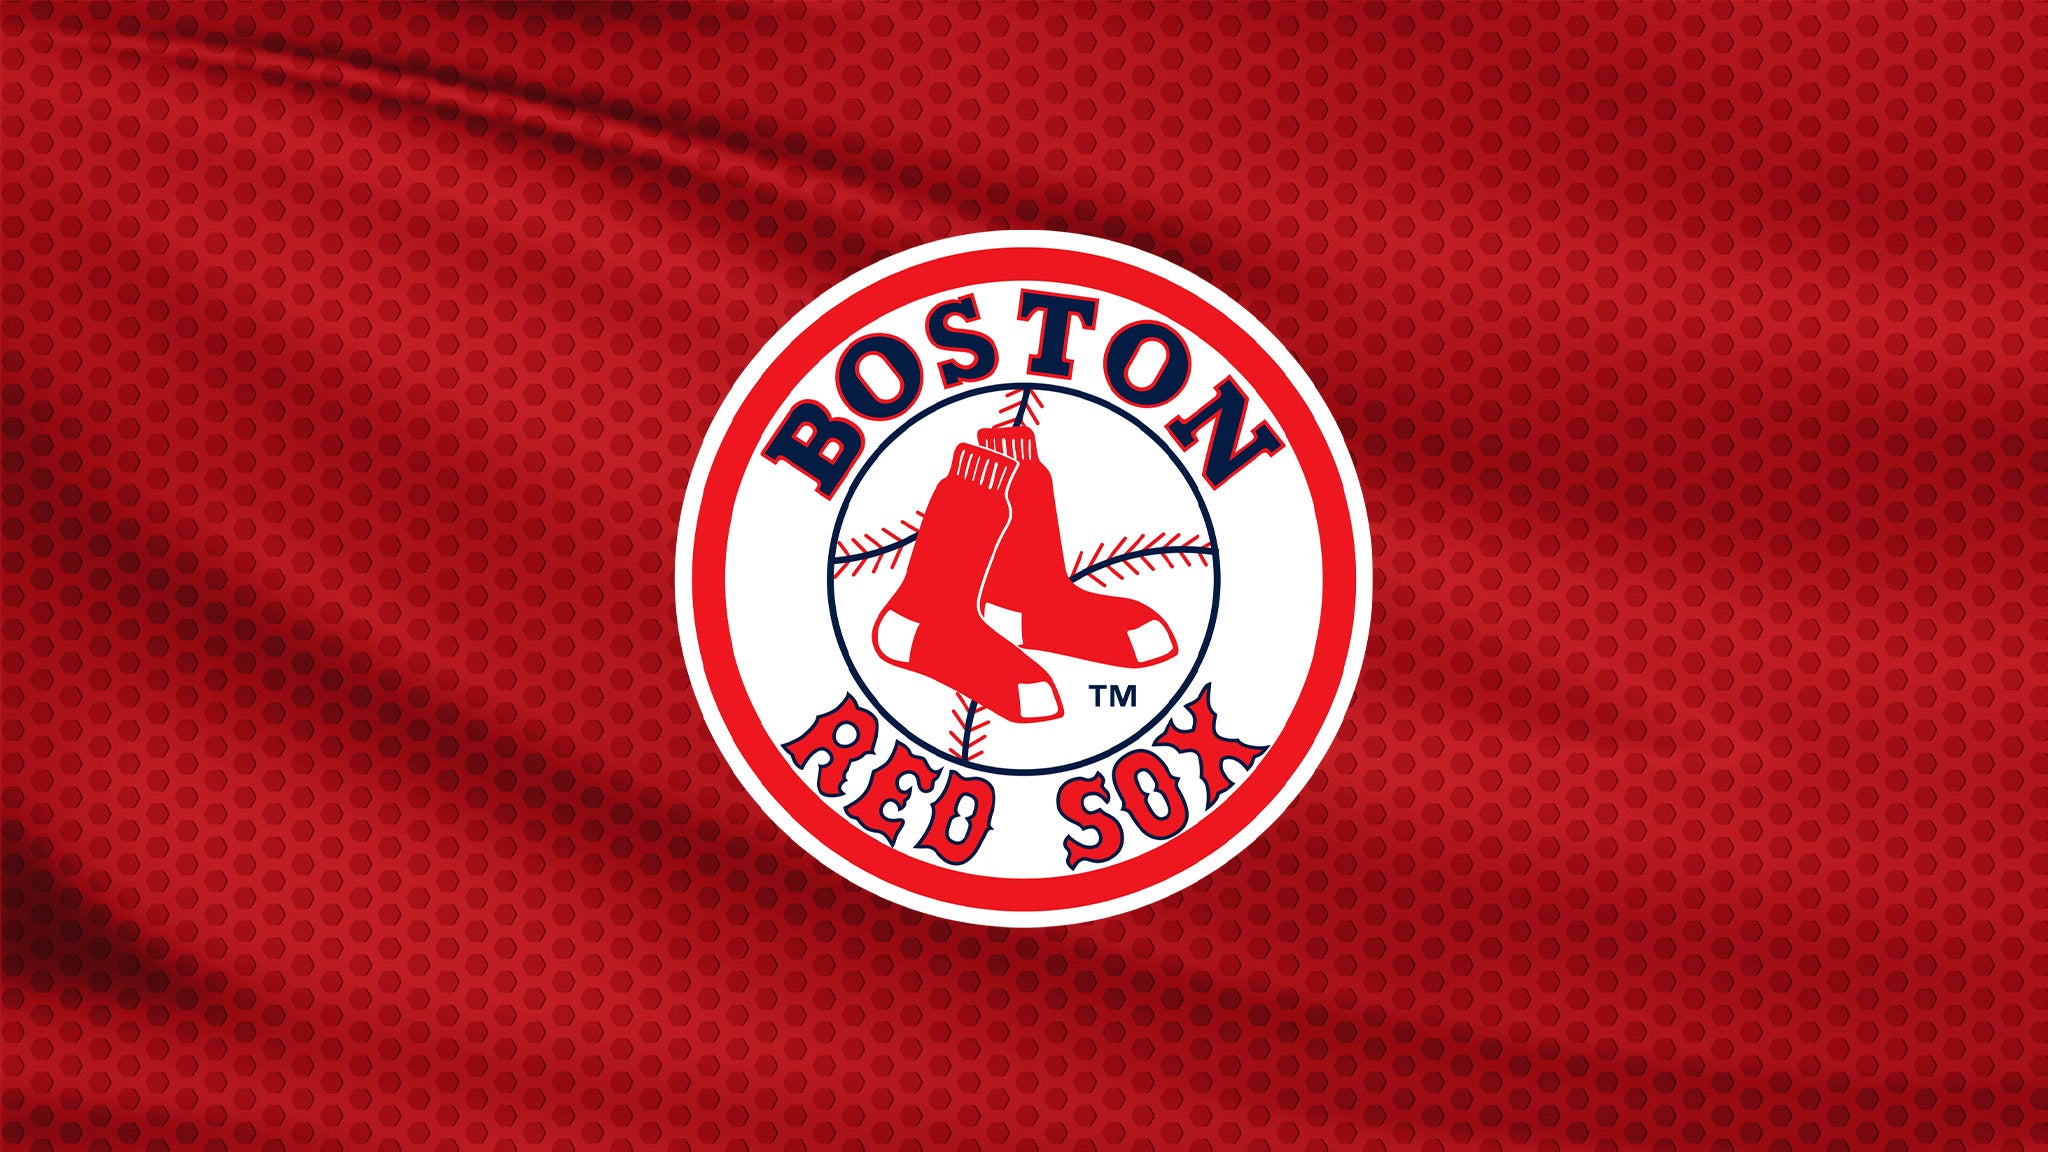 Boston Red Sox vs. Toronto Blue Jays